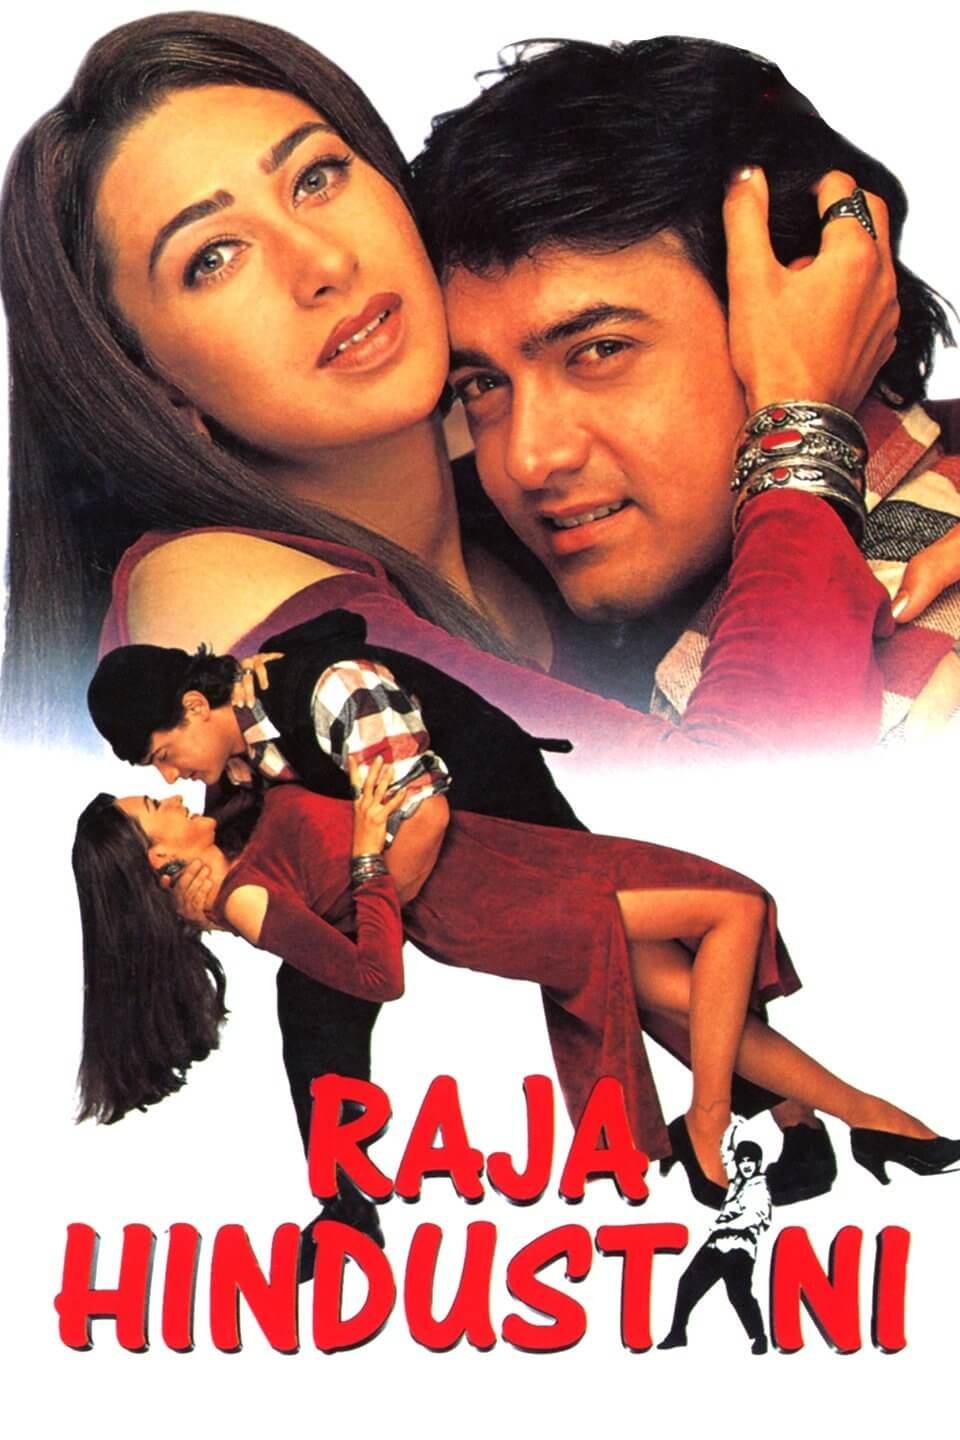 Kareena and Karisma Kapoor together in a film